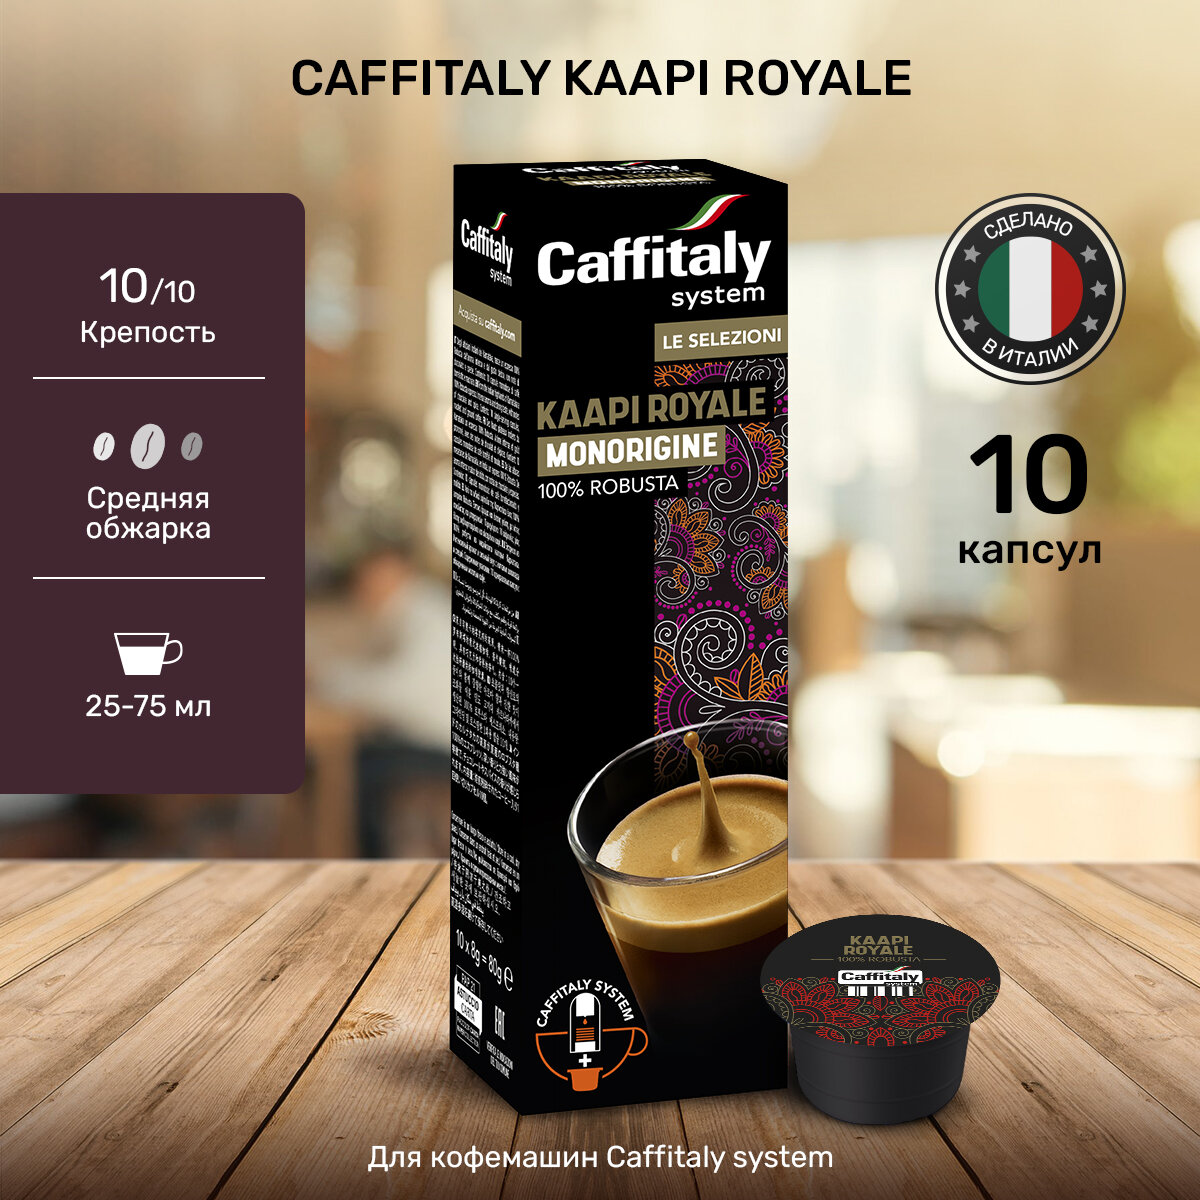 Капсулы Caffitaly для кофемашины, India Kaapi Royale, 10 капсул